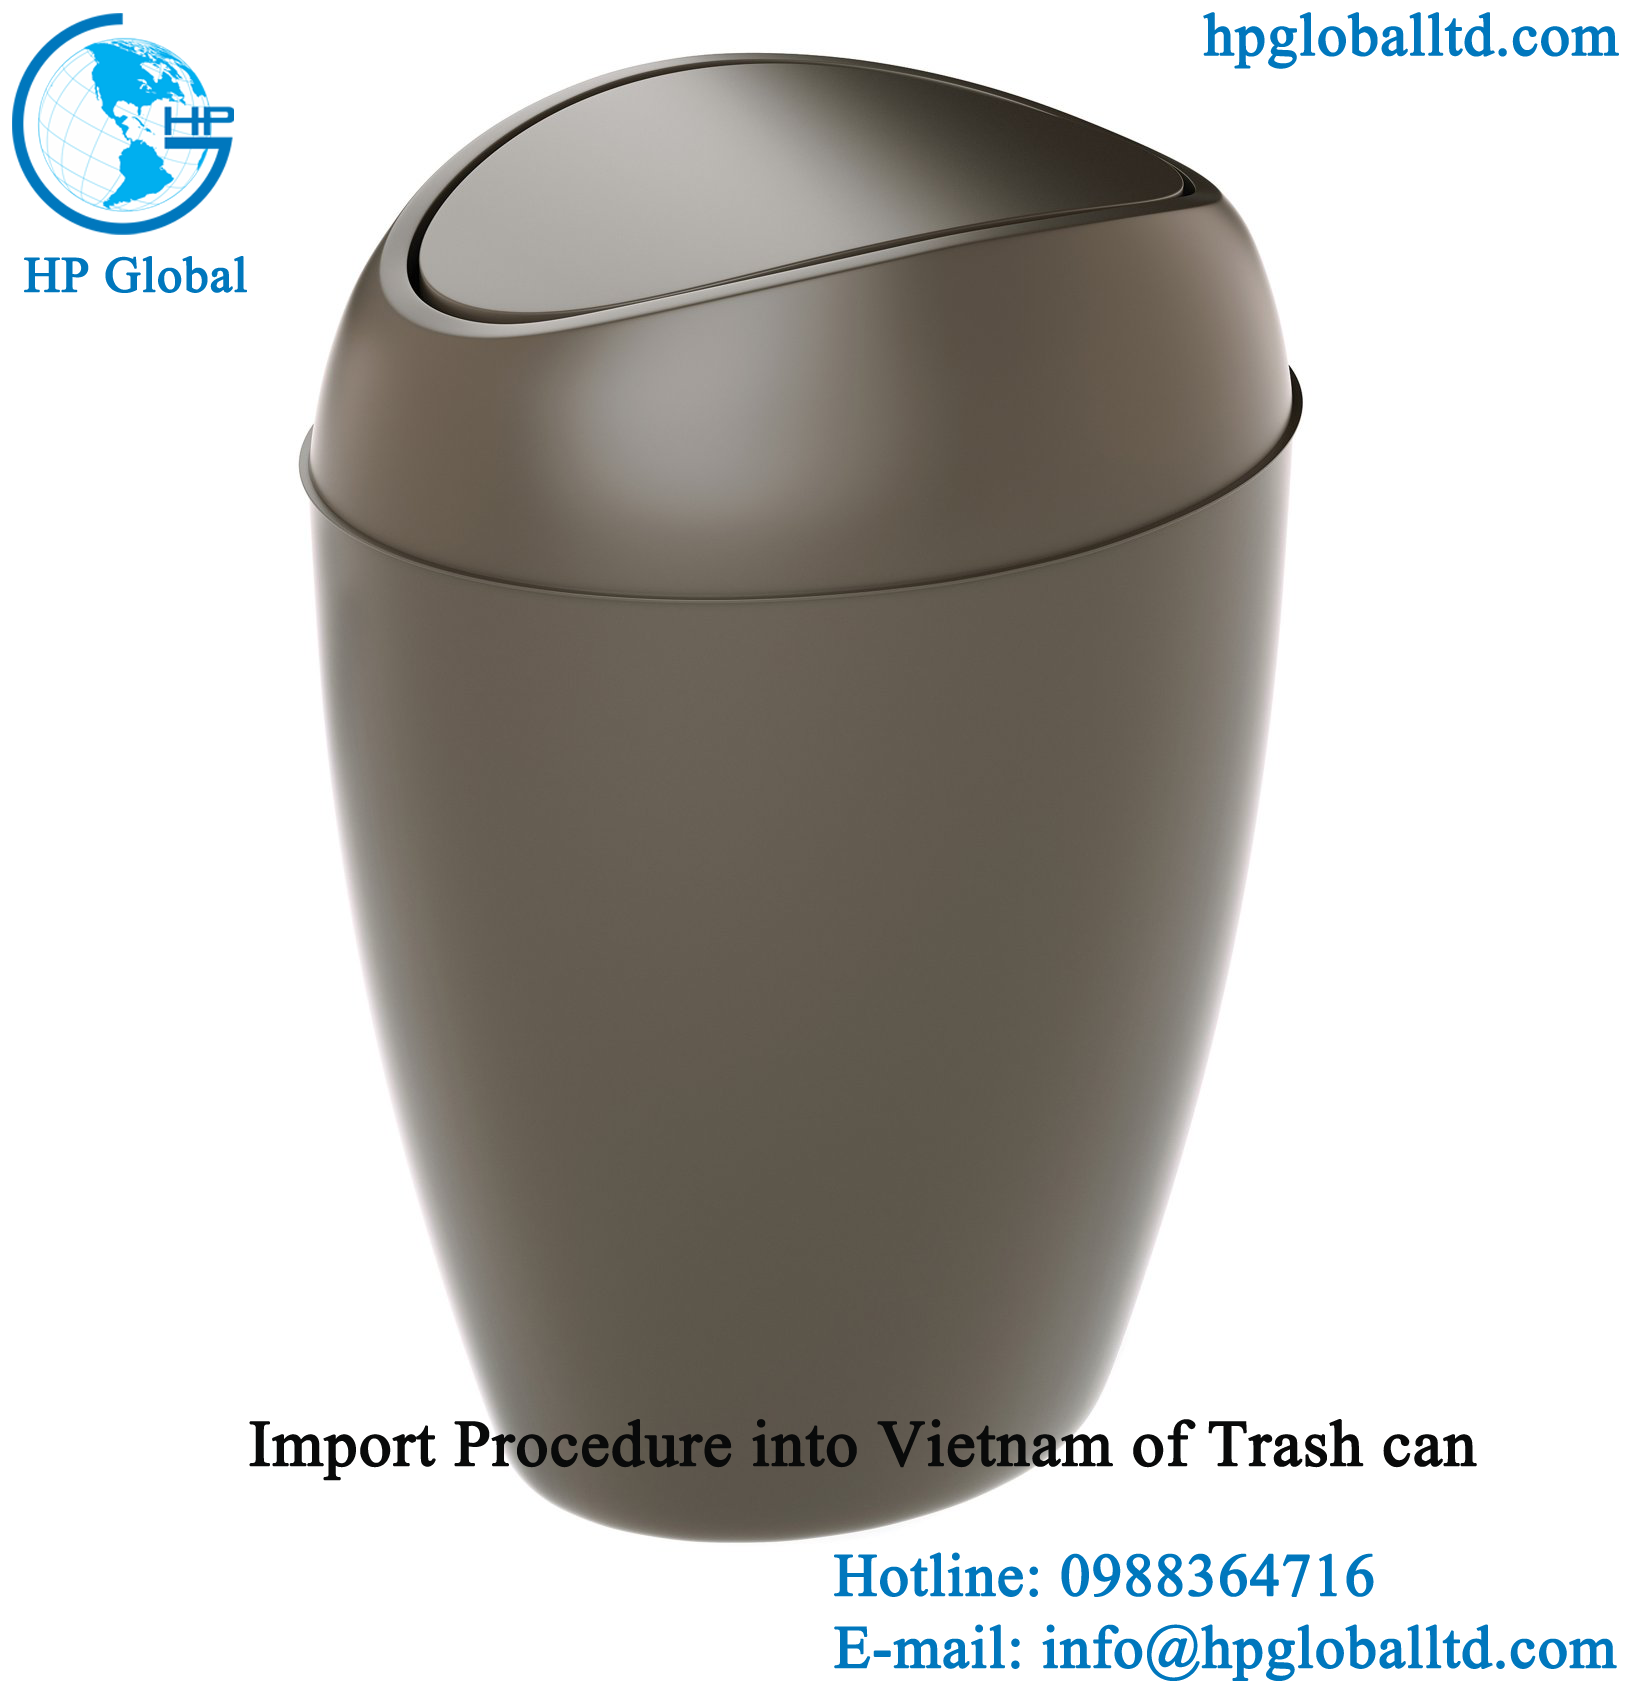 Import Procedure into Vietnam of Trash can